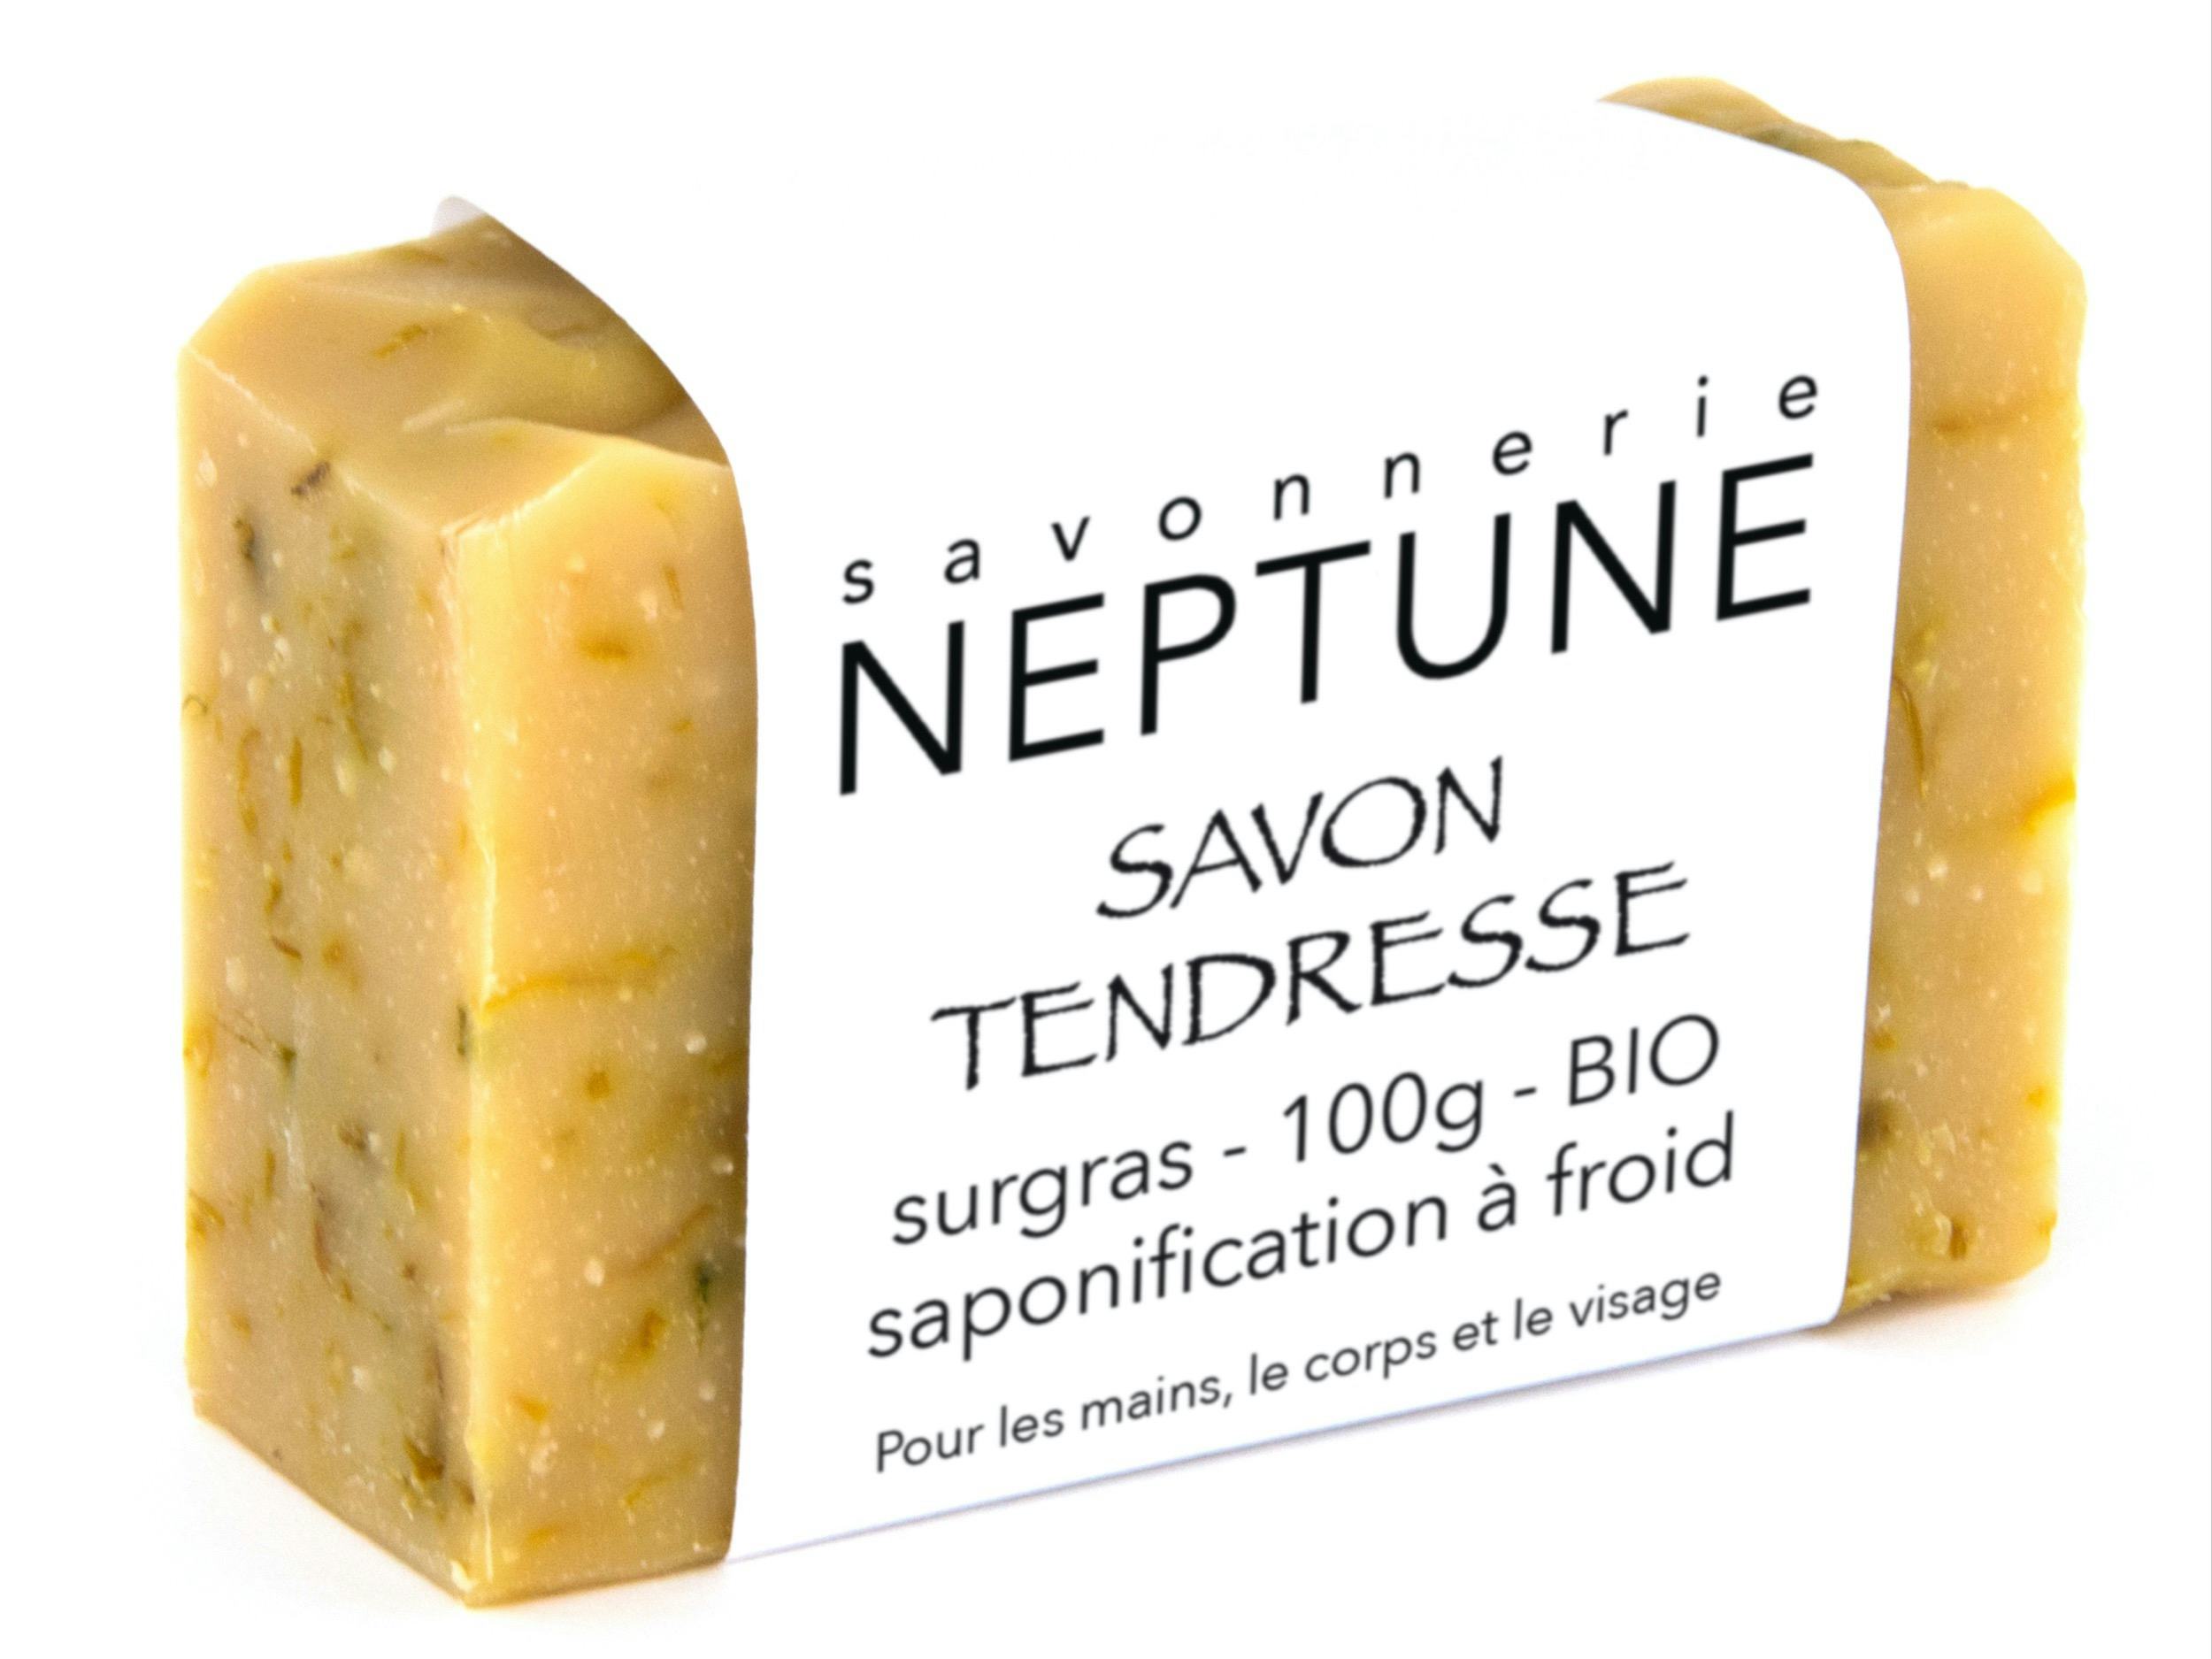 Tenderness soap - organic, Savonnerie NEPTUNE, Crésuz, image 2 | Mimelis